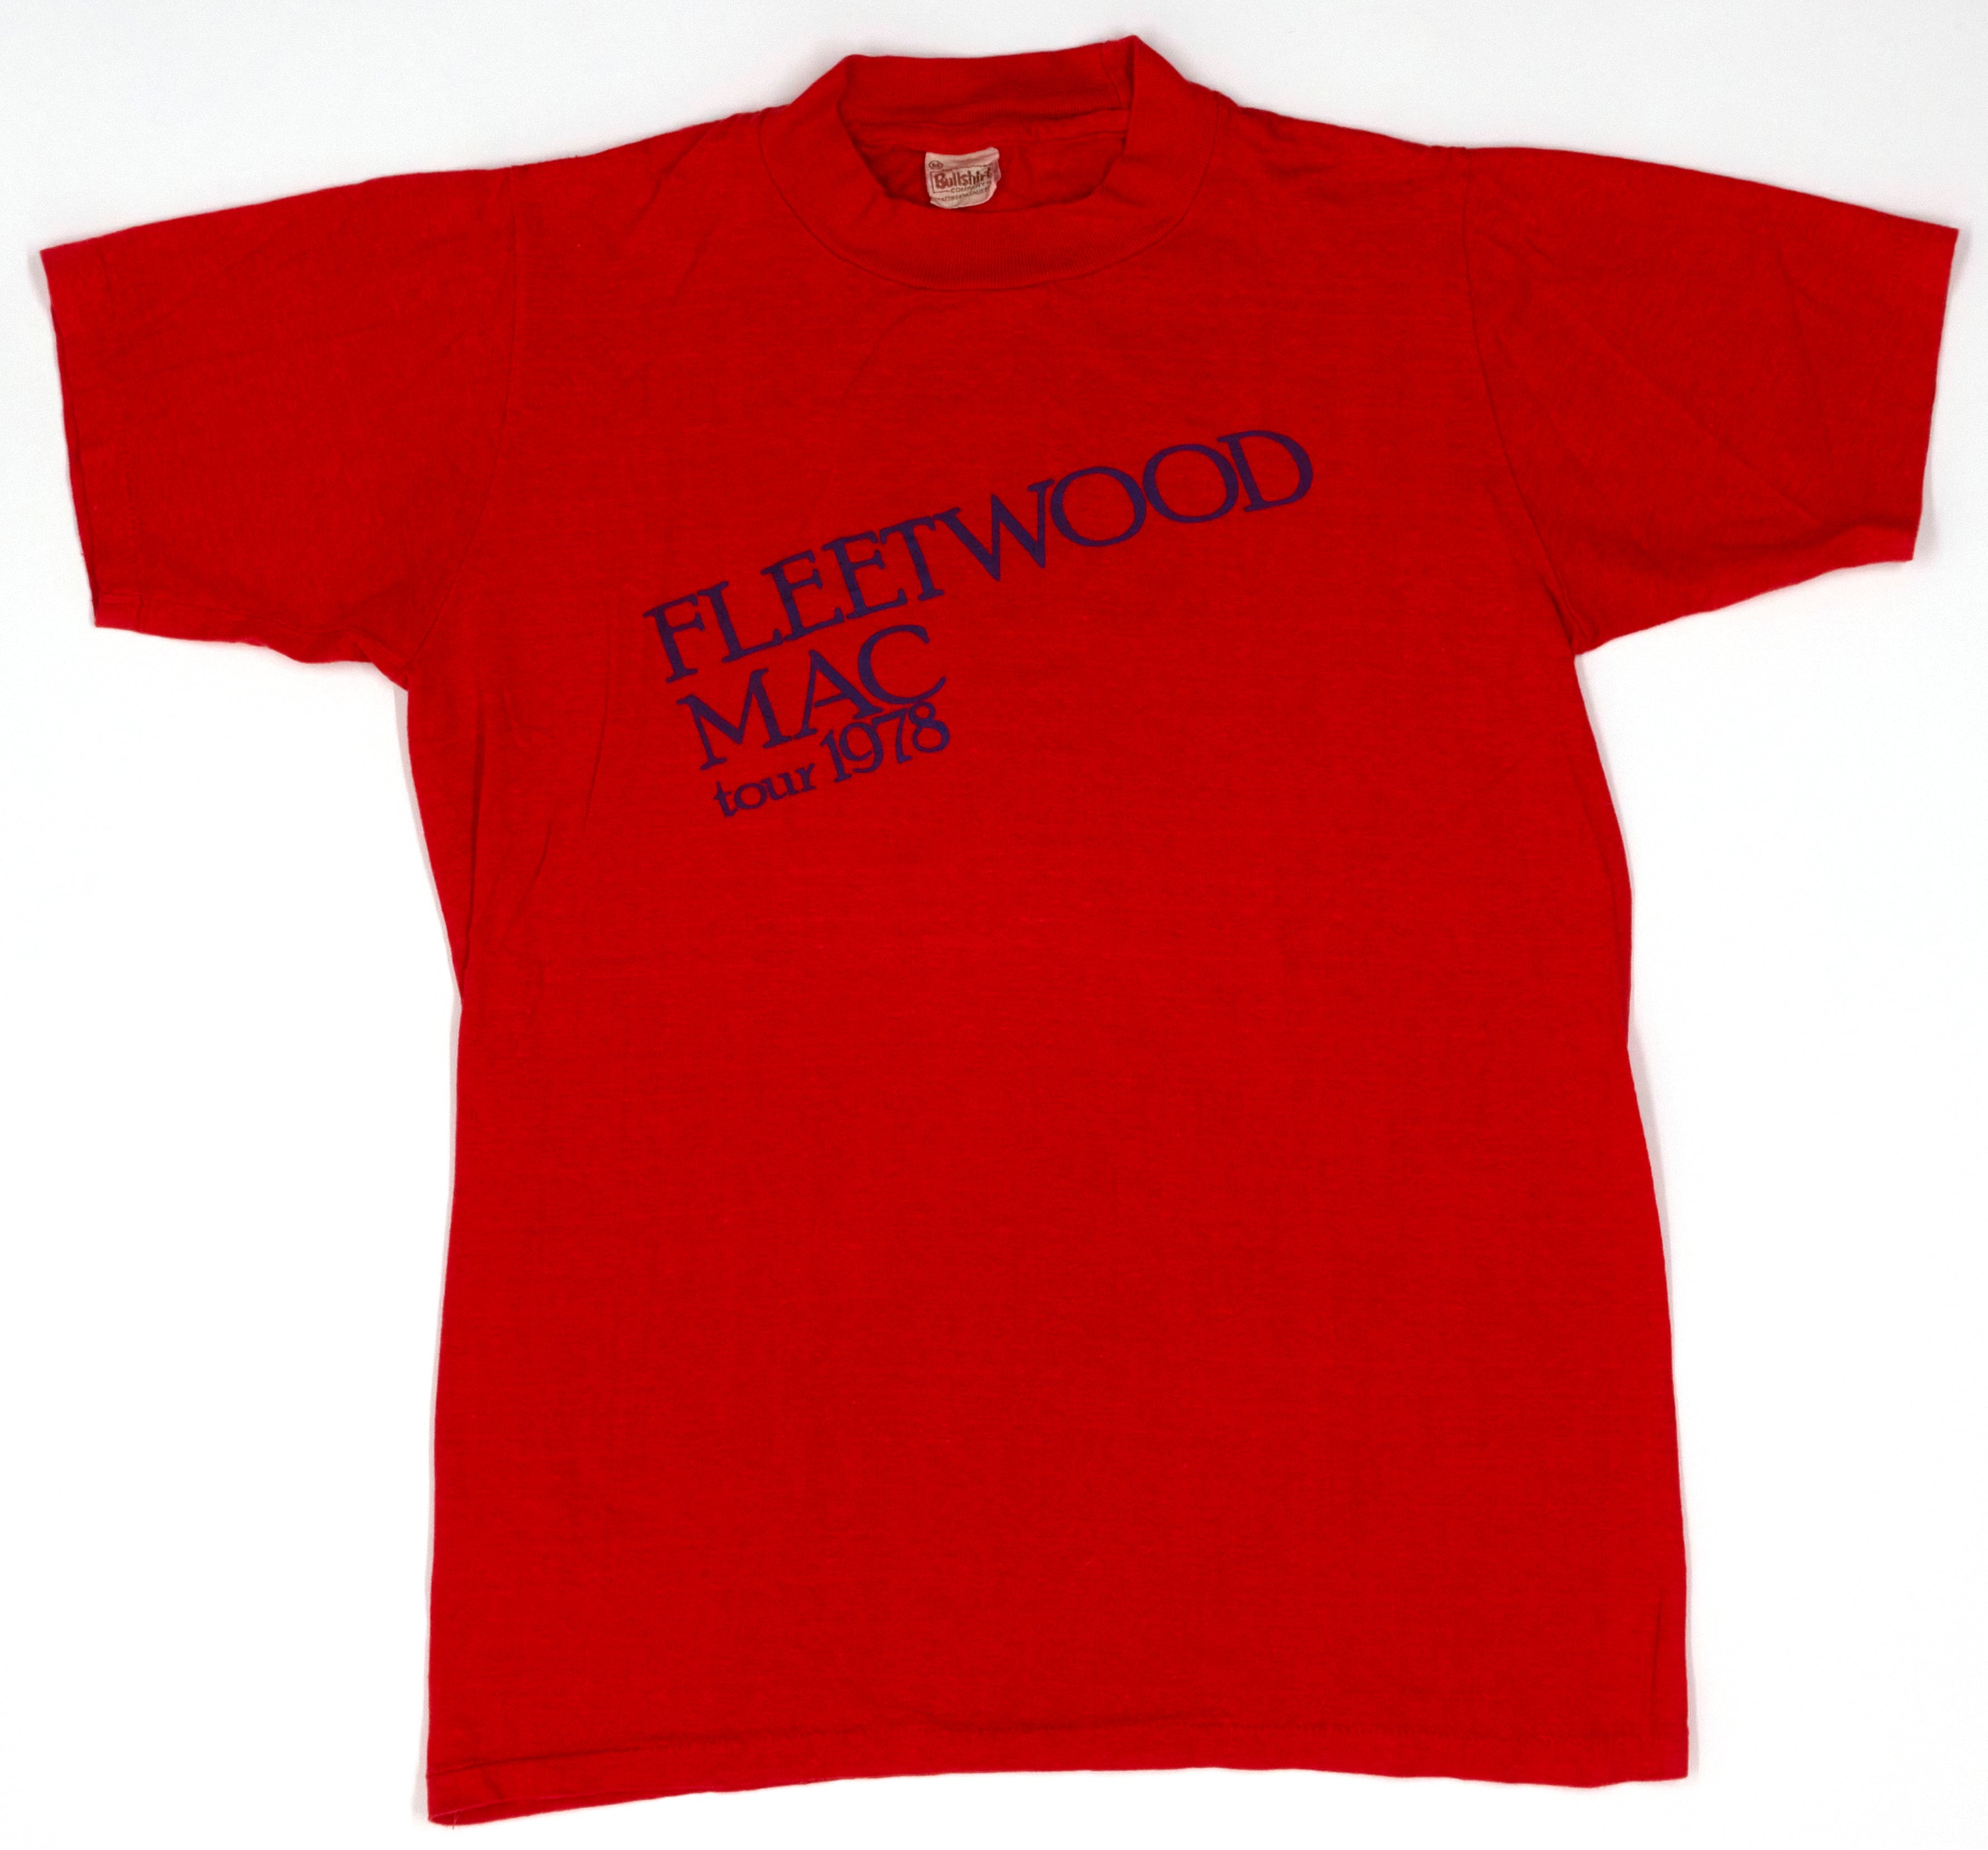 Fleetwood Mac – Rumours 1978 Tour Shirt Size Medium